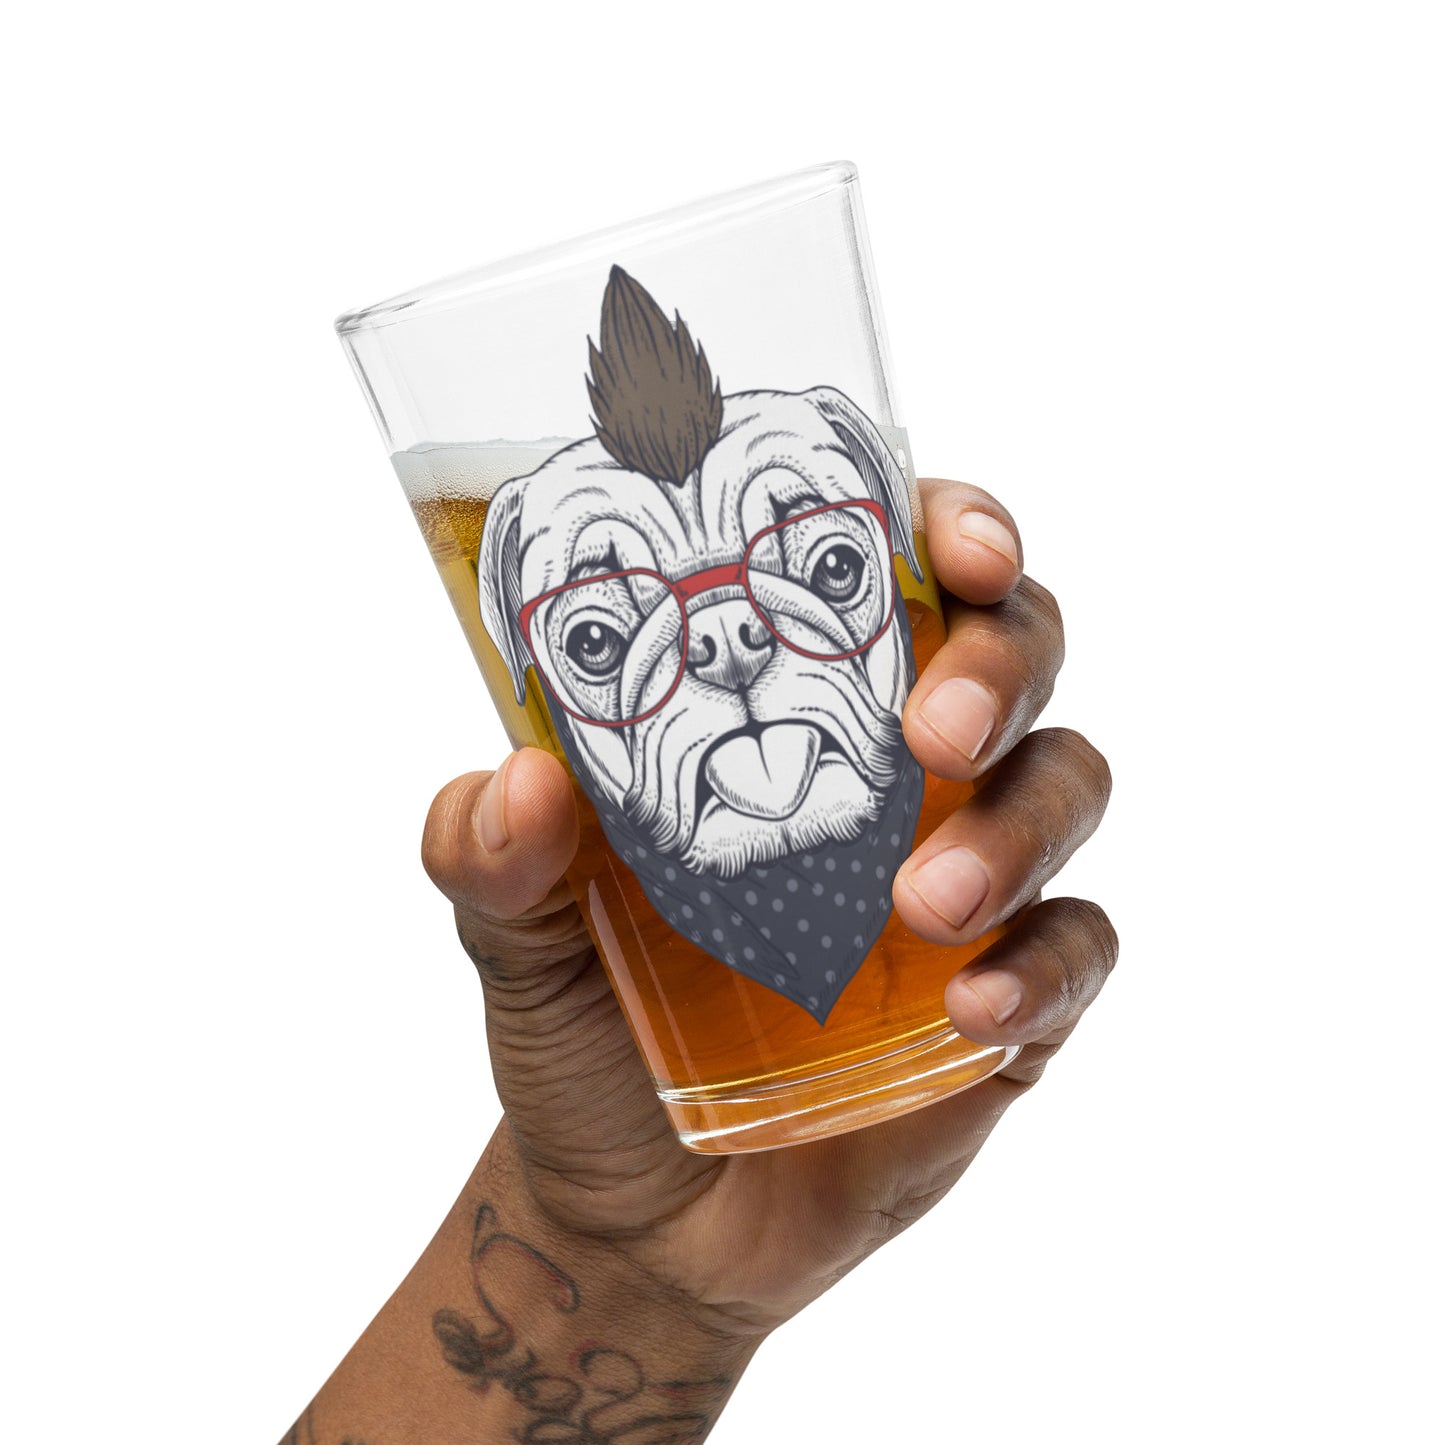 Mohawk Voodoo Pug Shaker pint glass